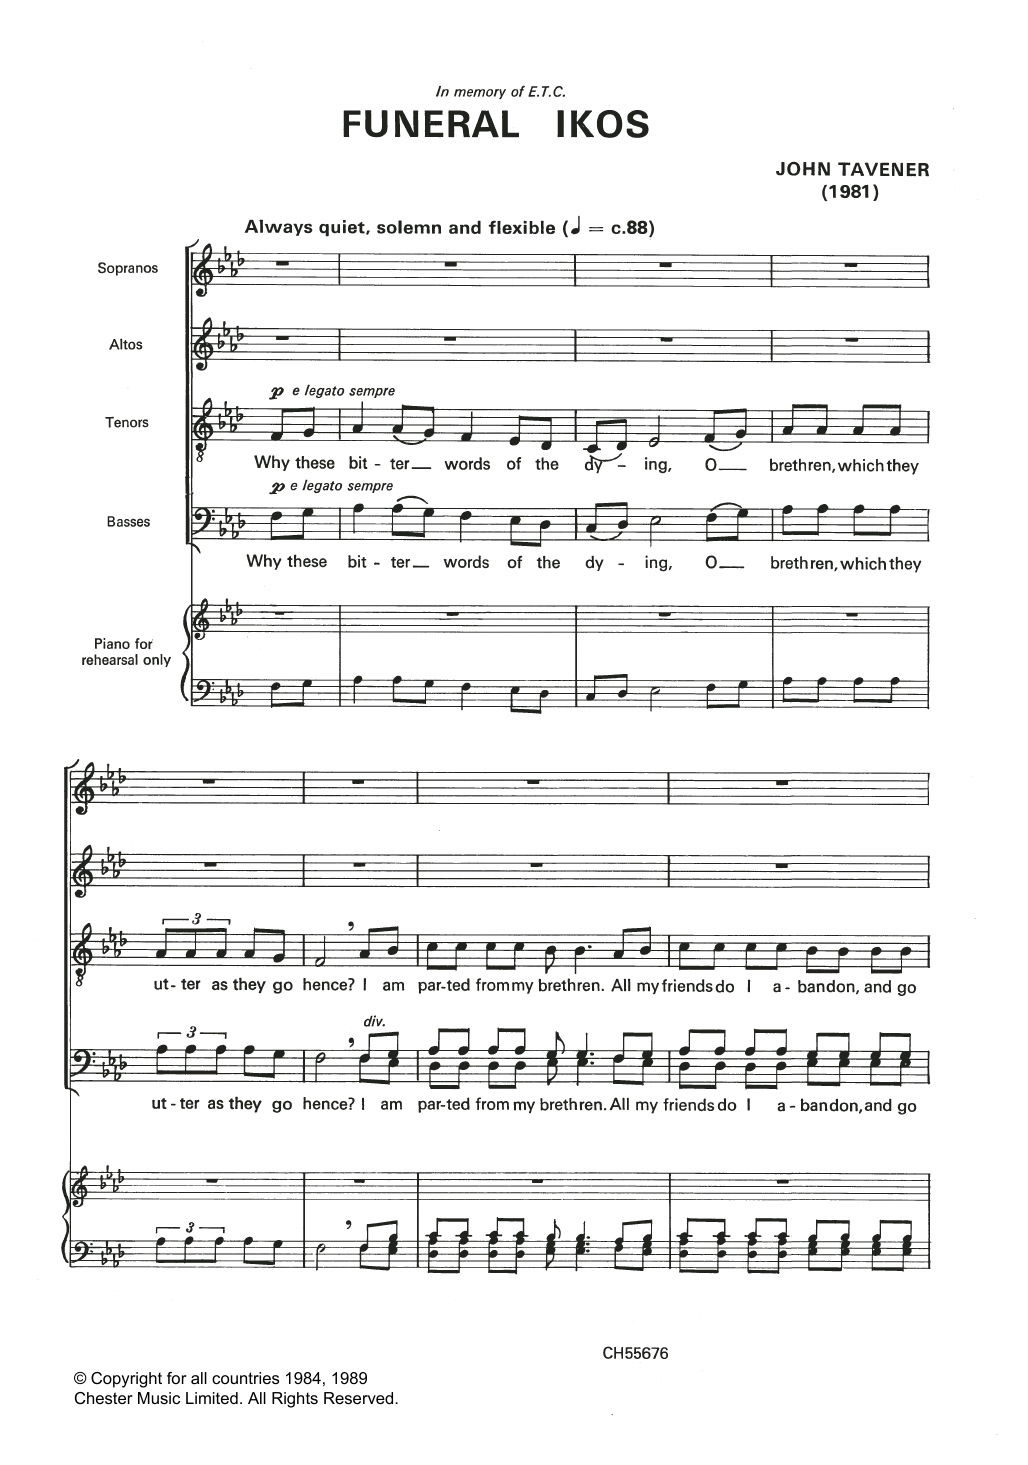 John Tavener Funeral Ikos Sheet Music Notes & Chords for Choral - Download or Print PDF